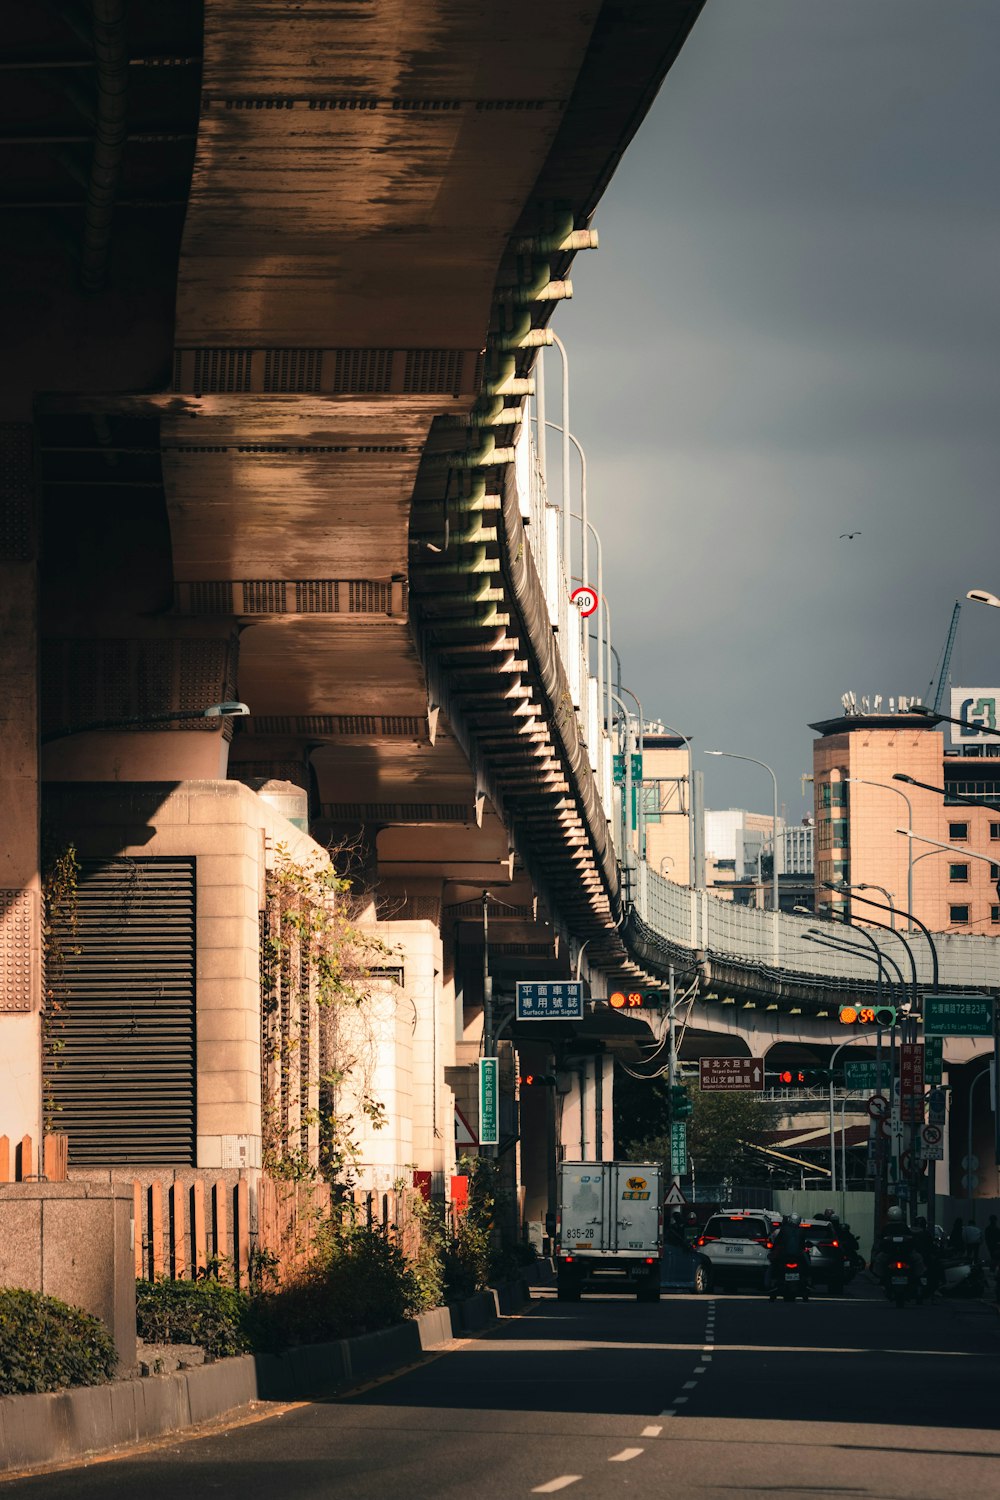 a view of a city street under a bridge